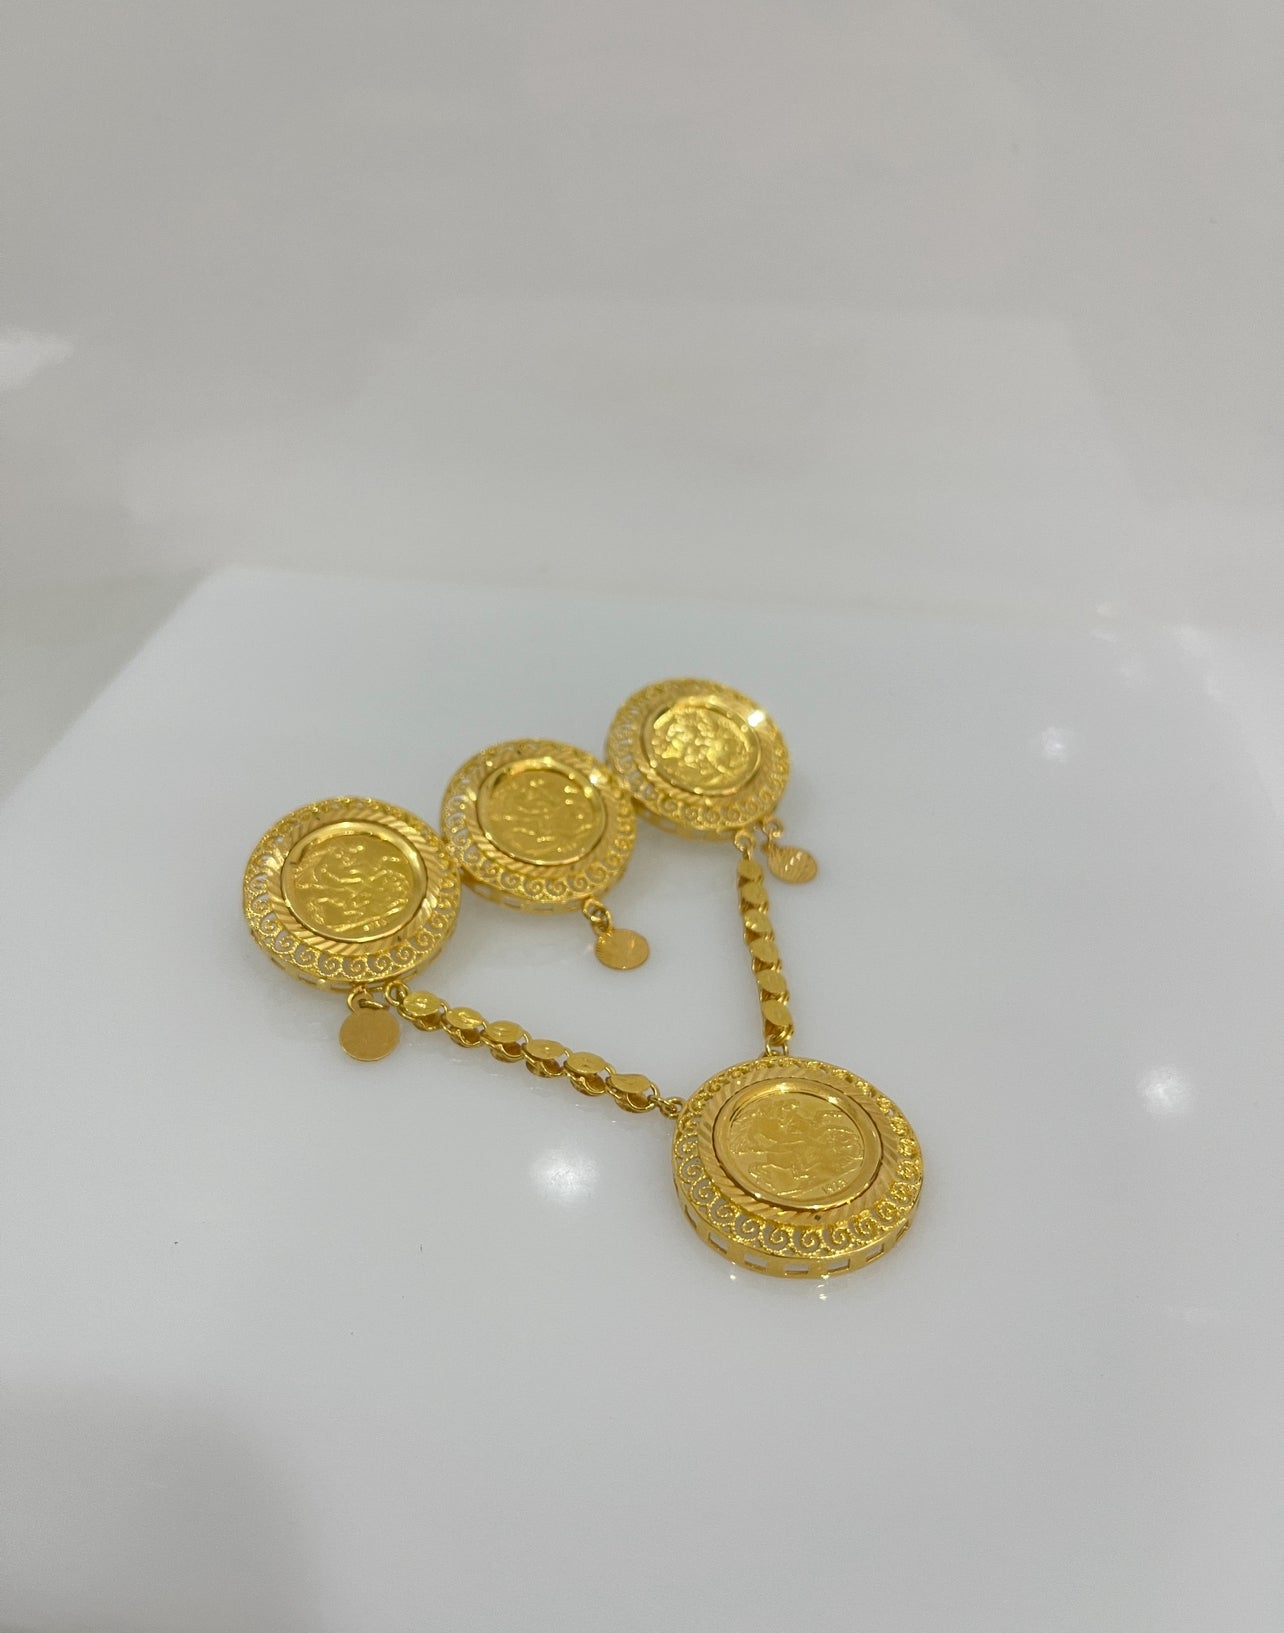 21k Gold Coin Pin